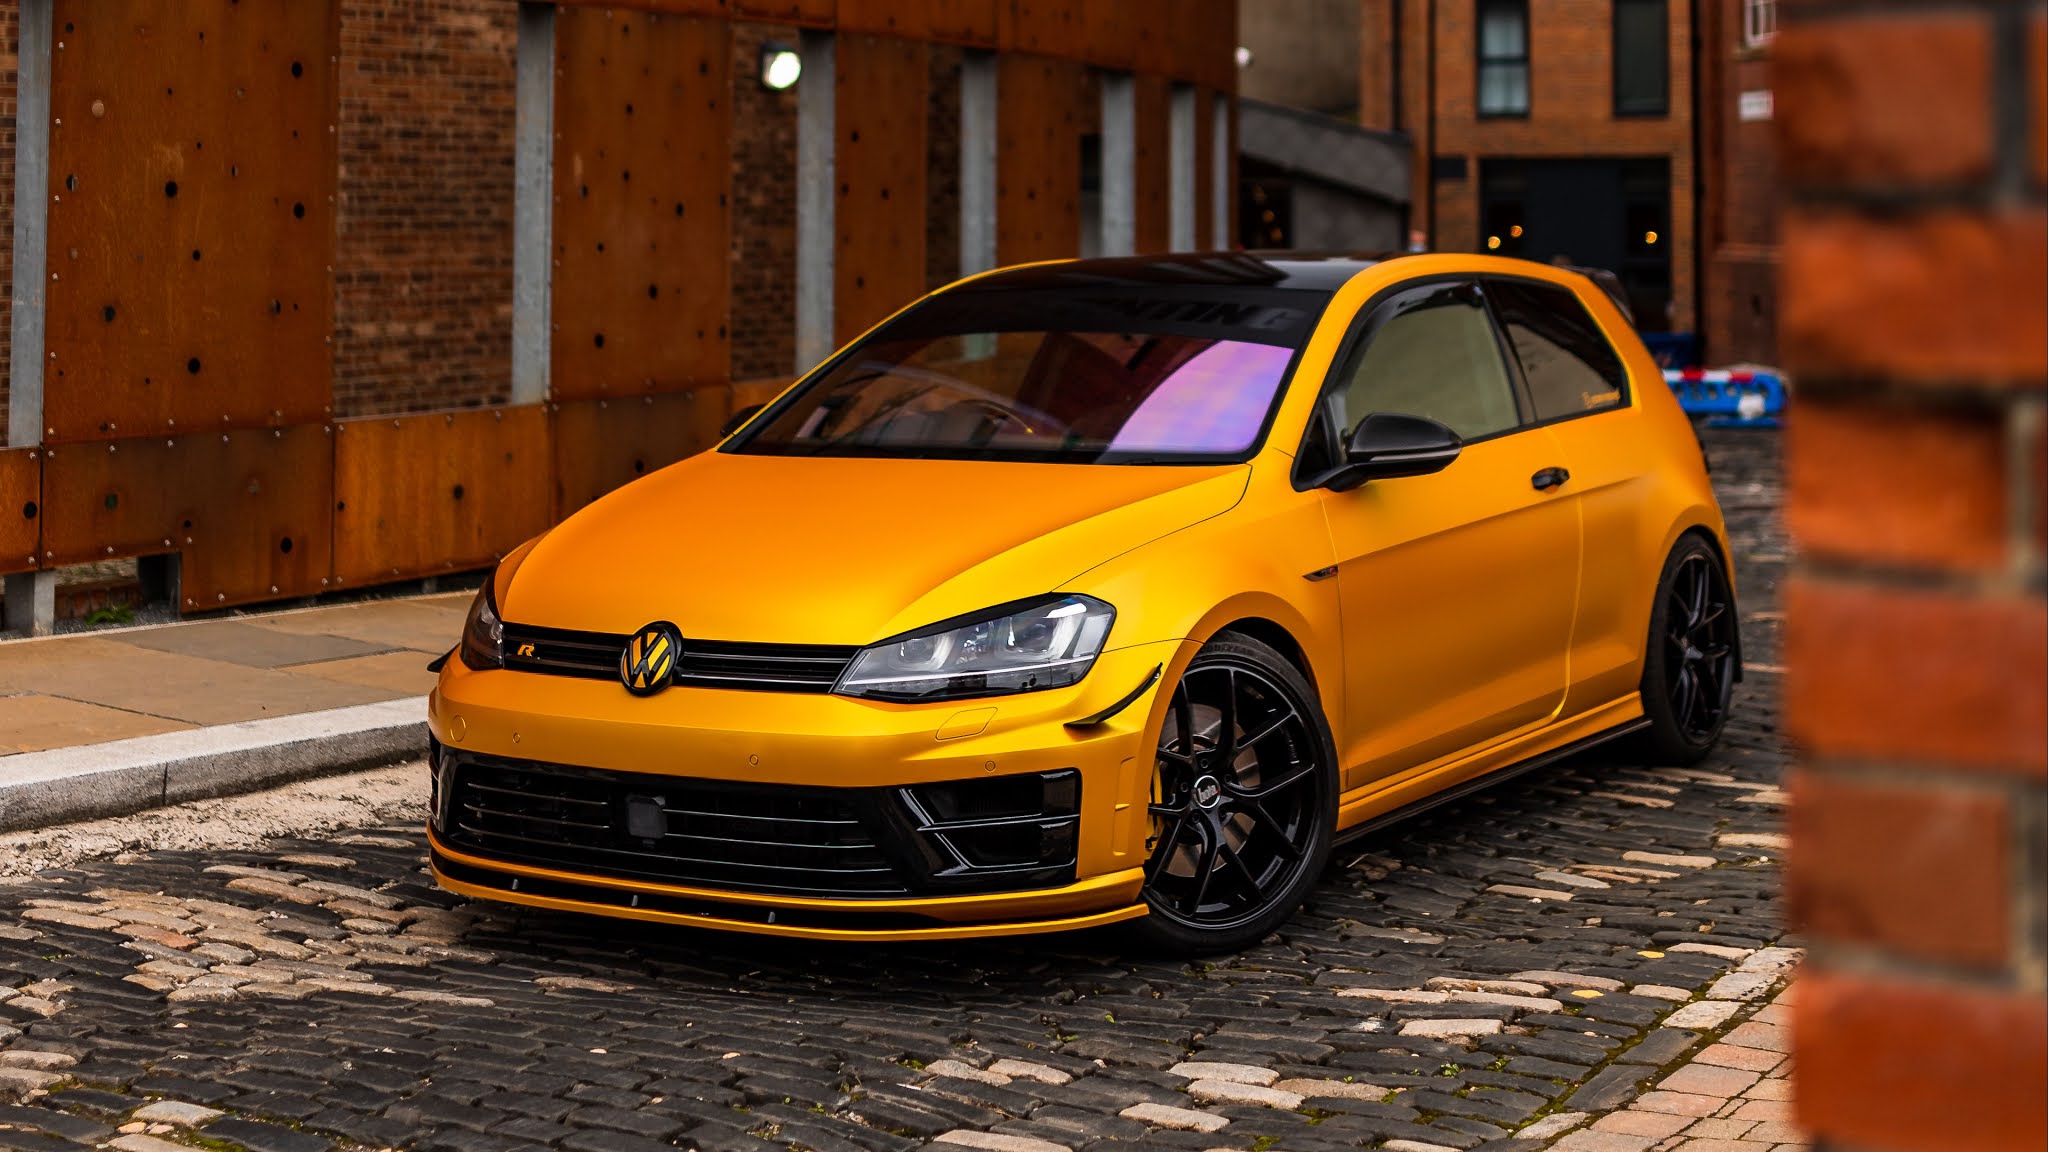 Volkswagen Golf MK5, Yellow Car, Front View - iPhone Wallpapers